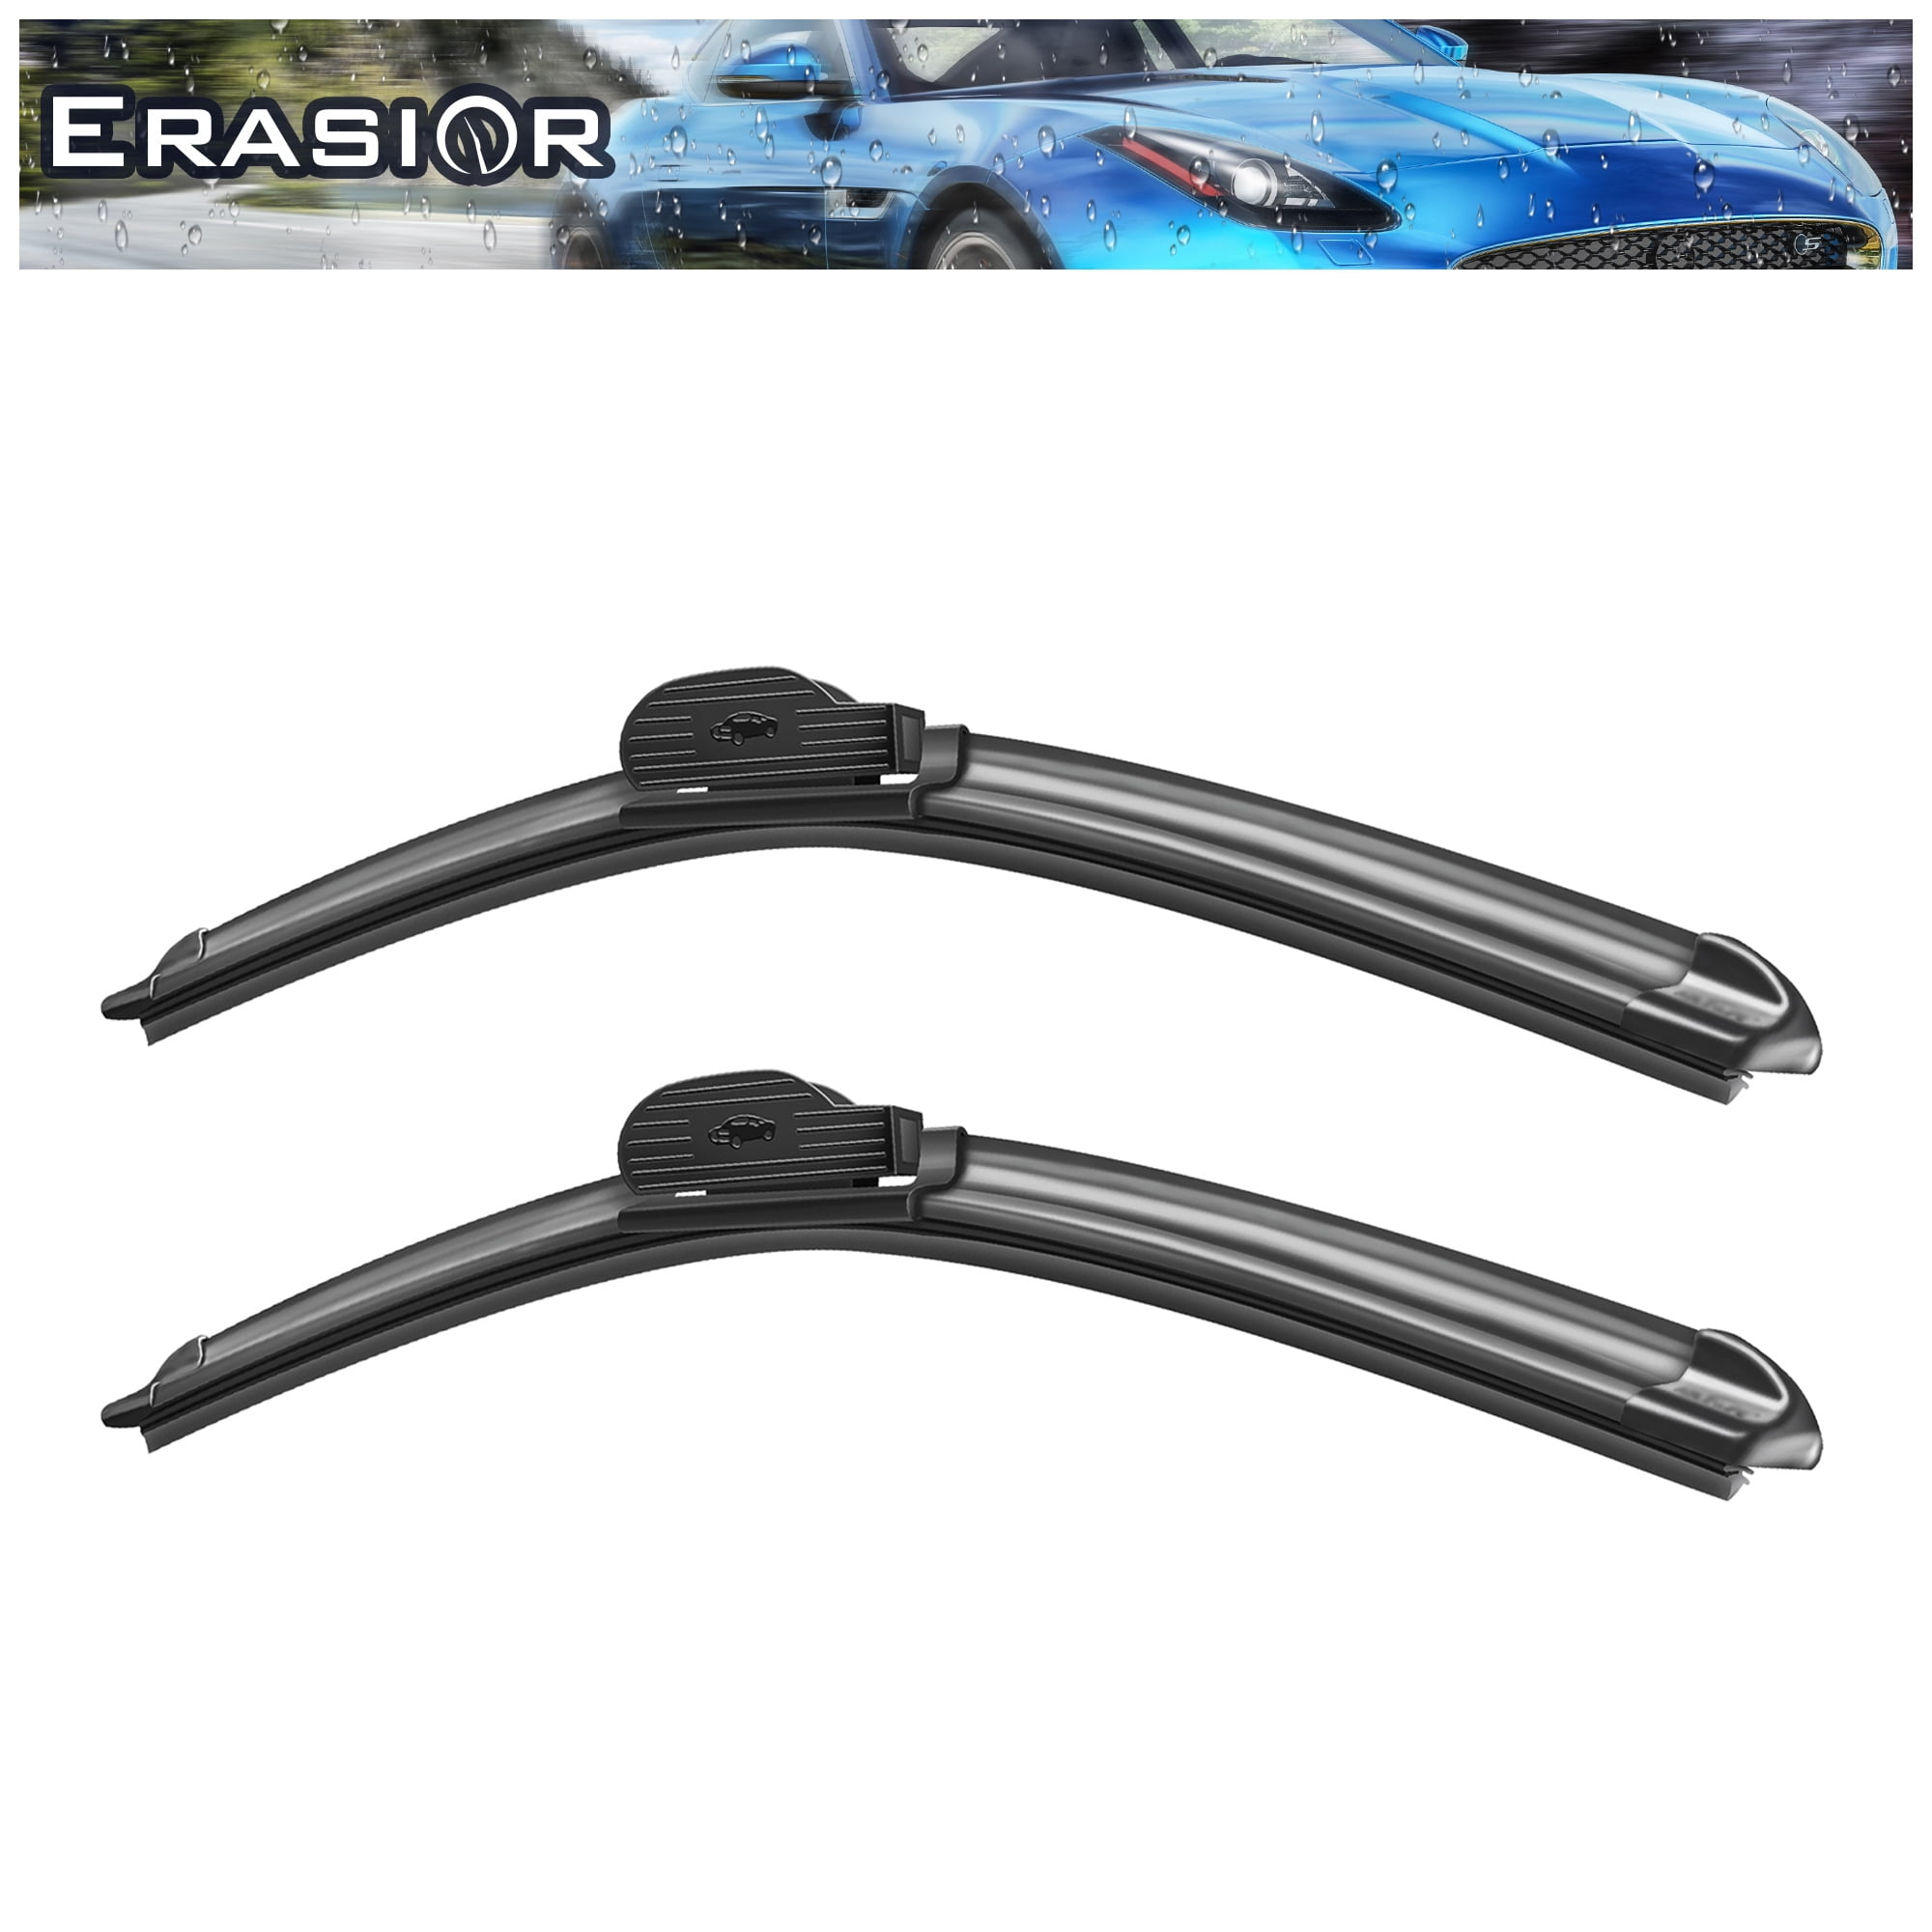 Erasior 28Inch & 28Inch Windshield Wiper Blades Fit For Ford 